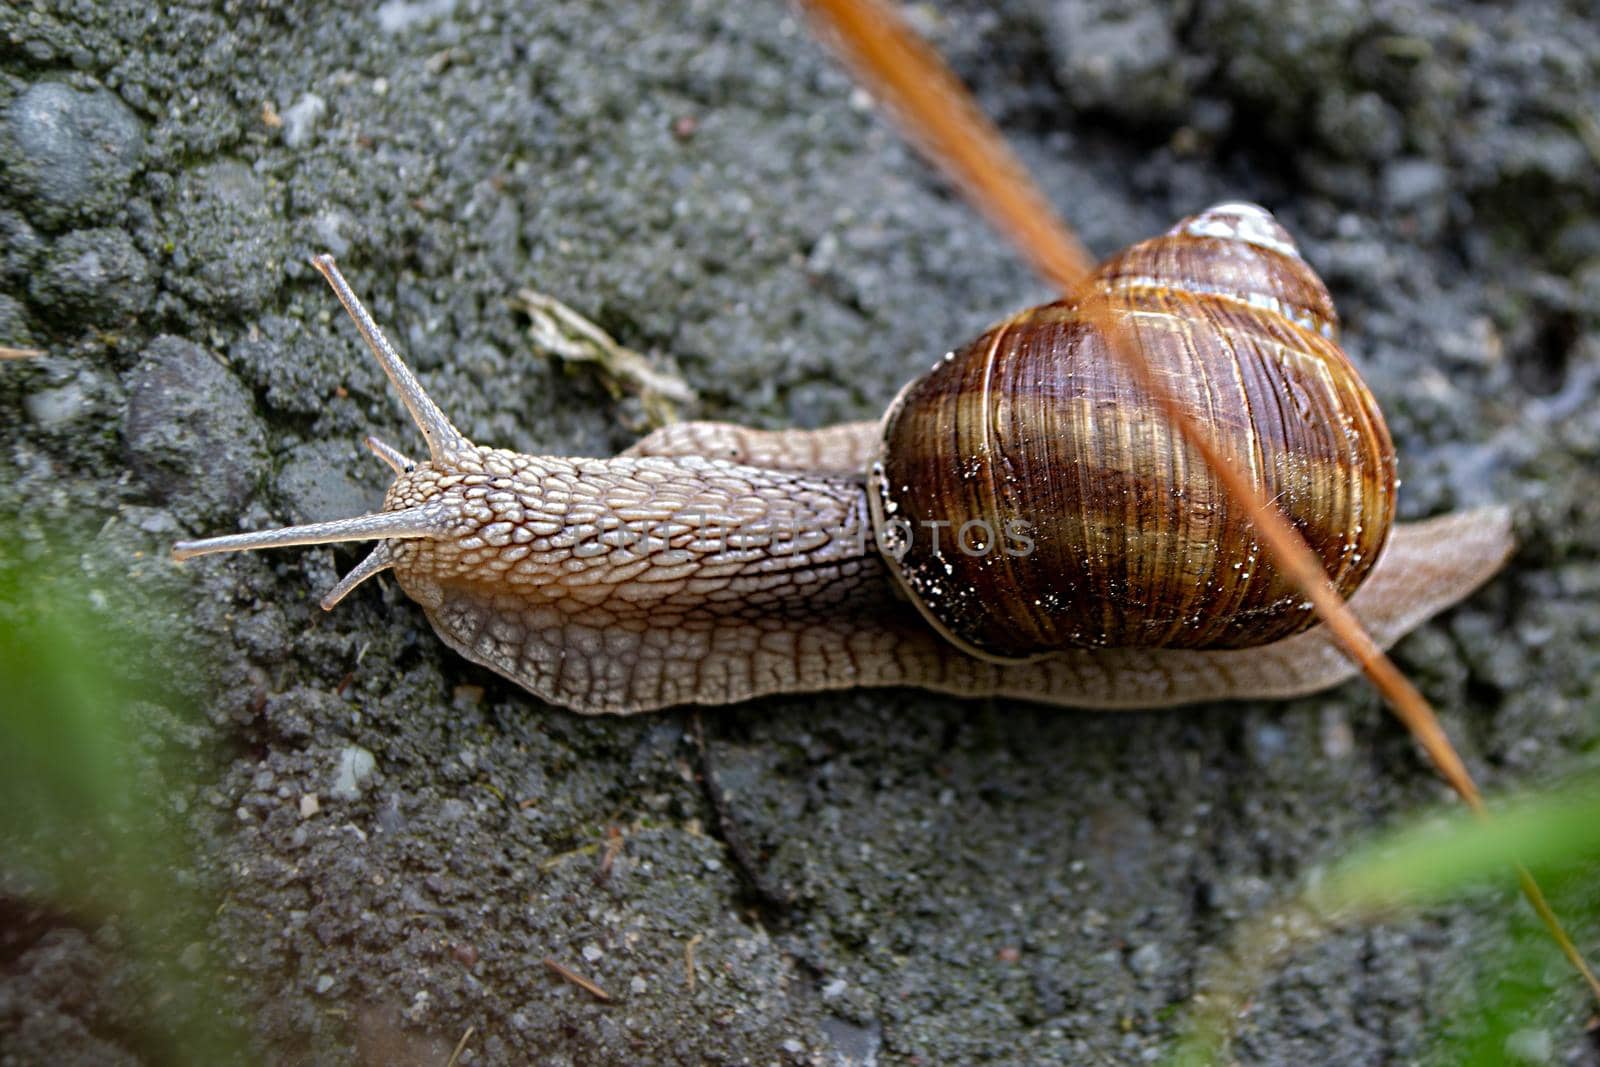 Roman Snail - Helix pomatia, common snail from European gardens and meadows, Czech Republic. High quality photo